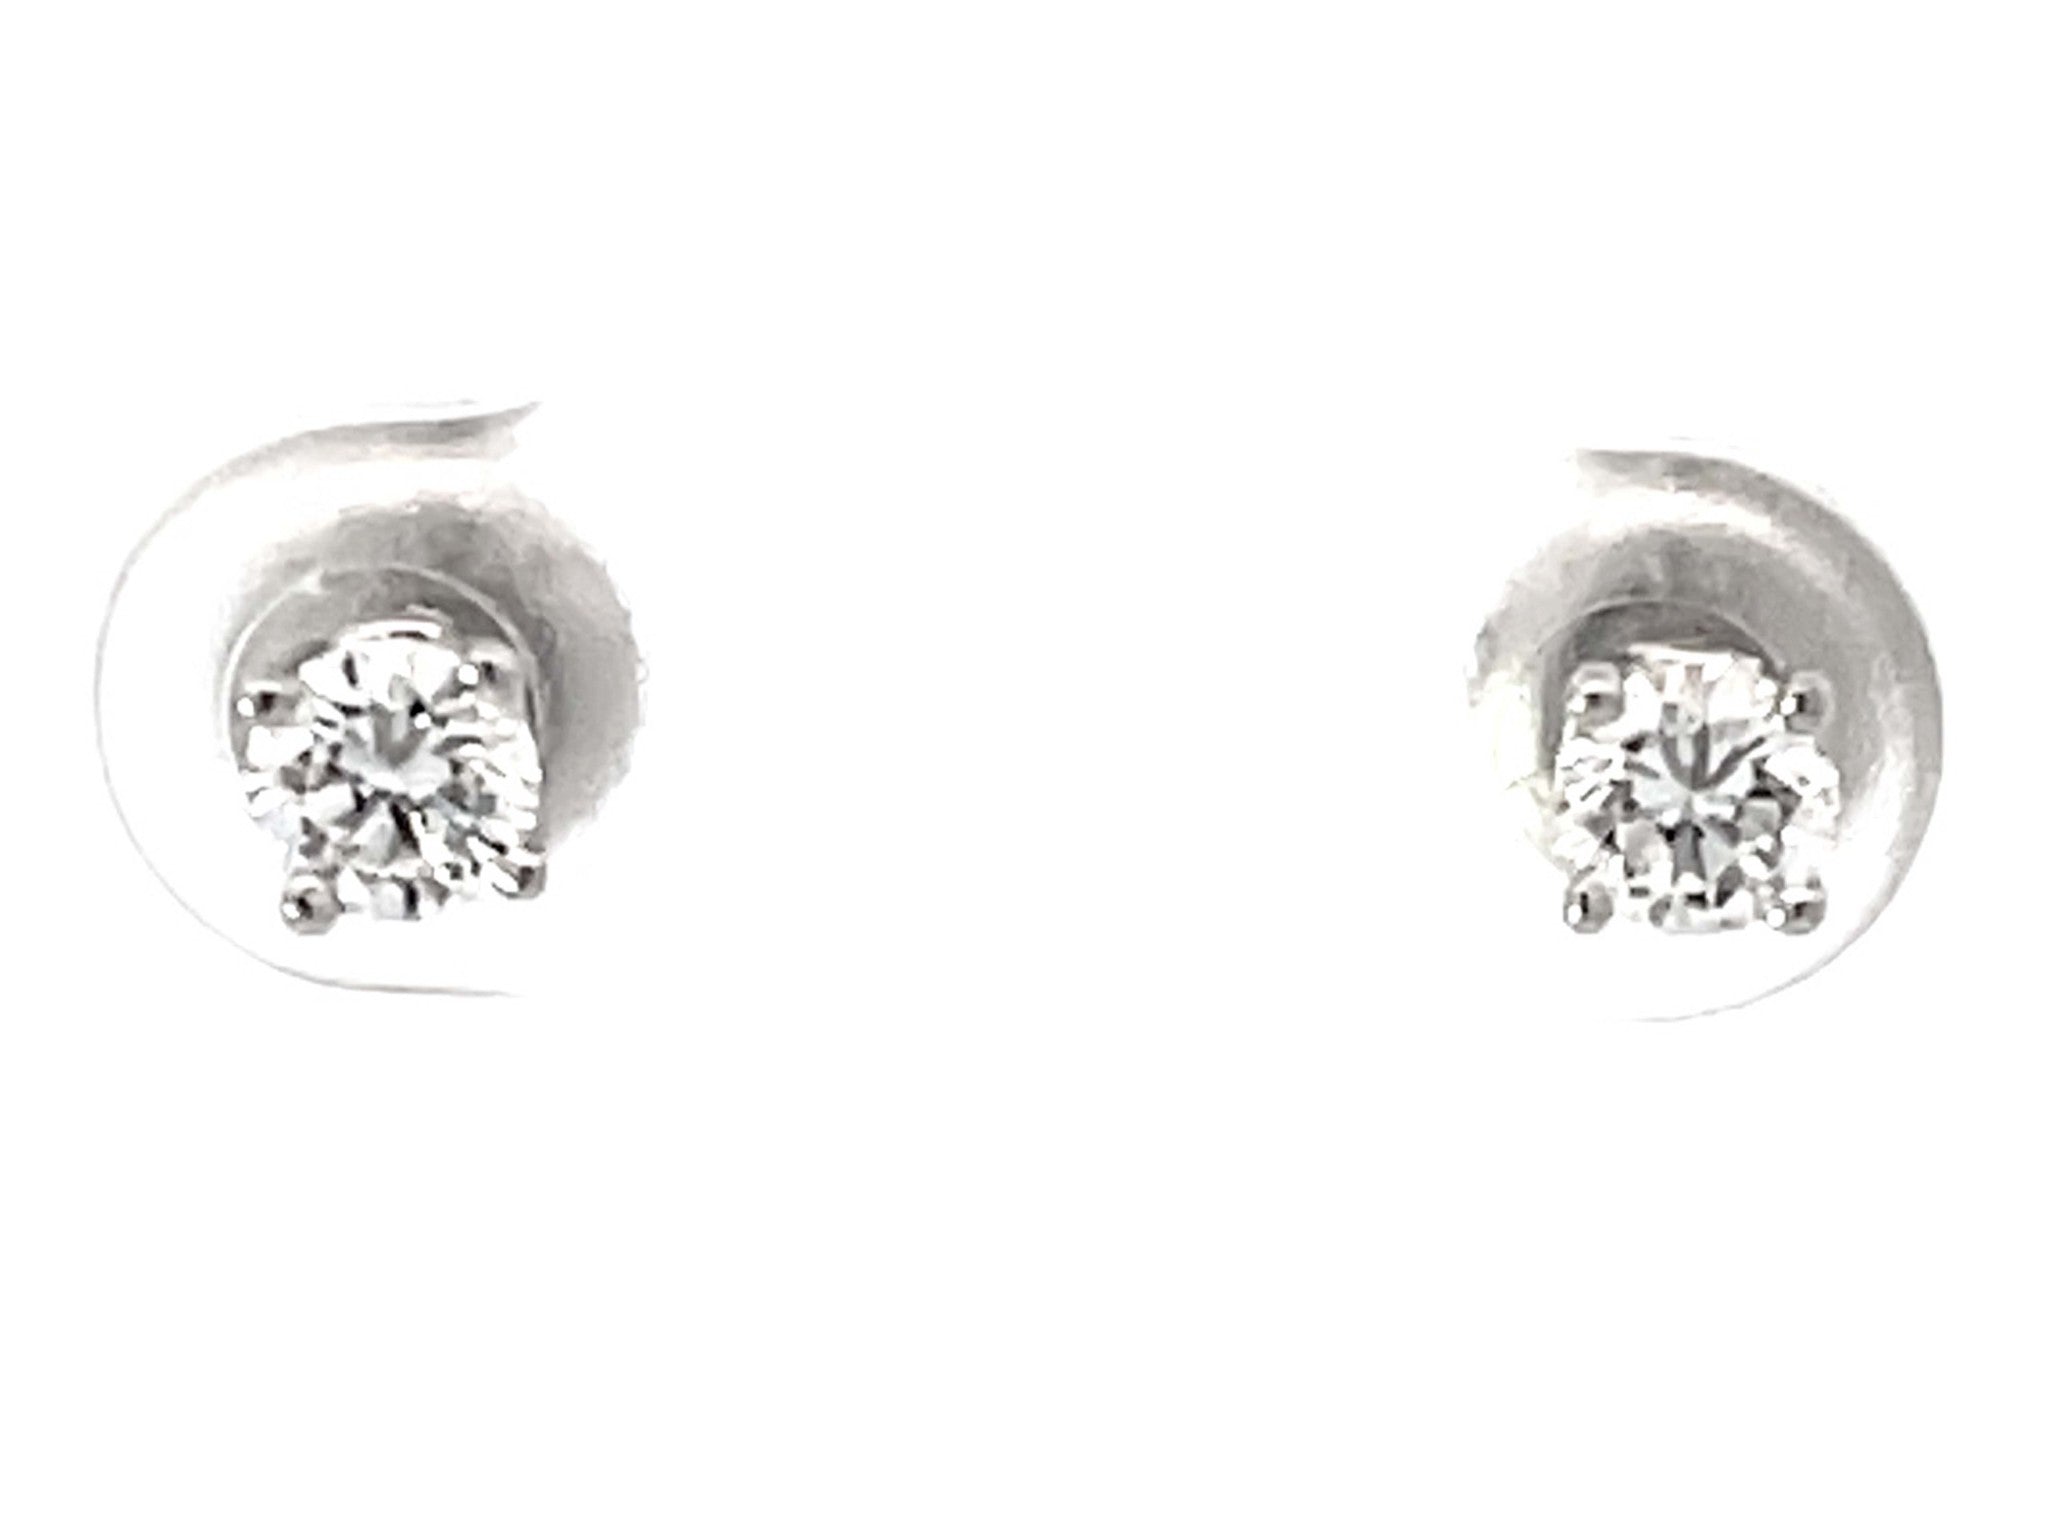 Tiffany Solitaire Diamond Stud Earrings